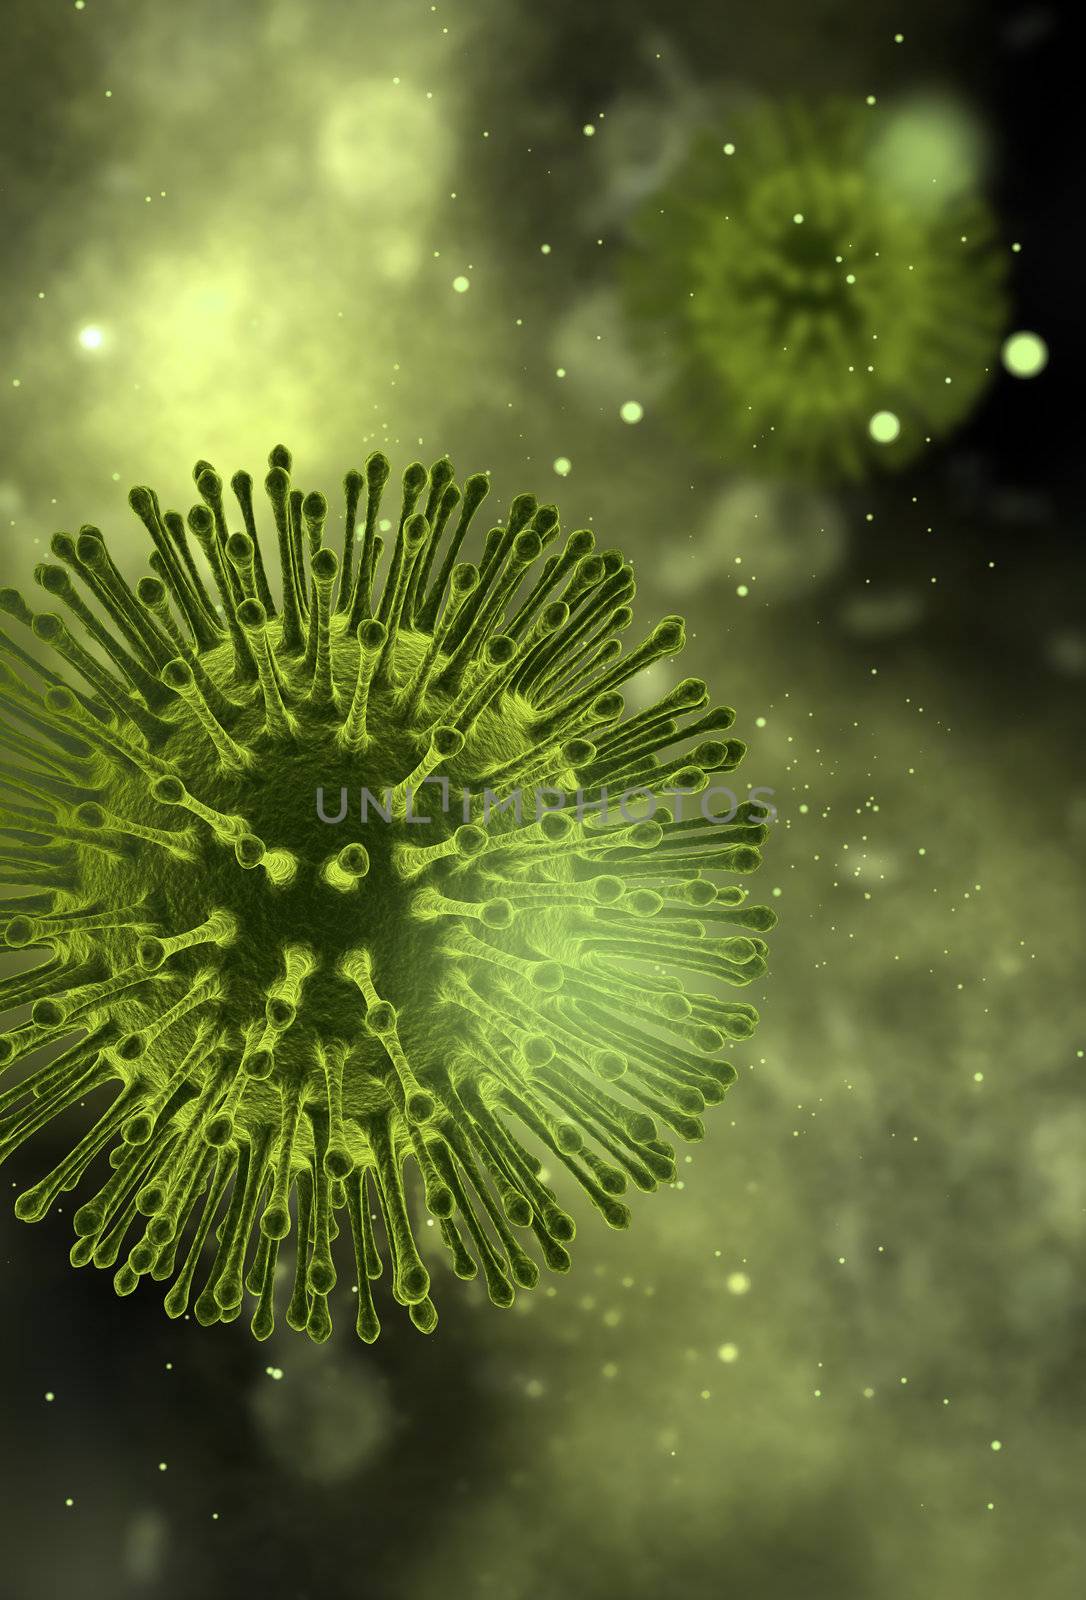 Virus macro view with bacteria background CGI